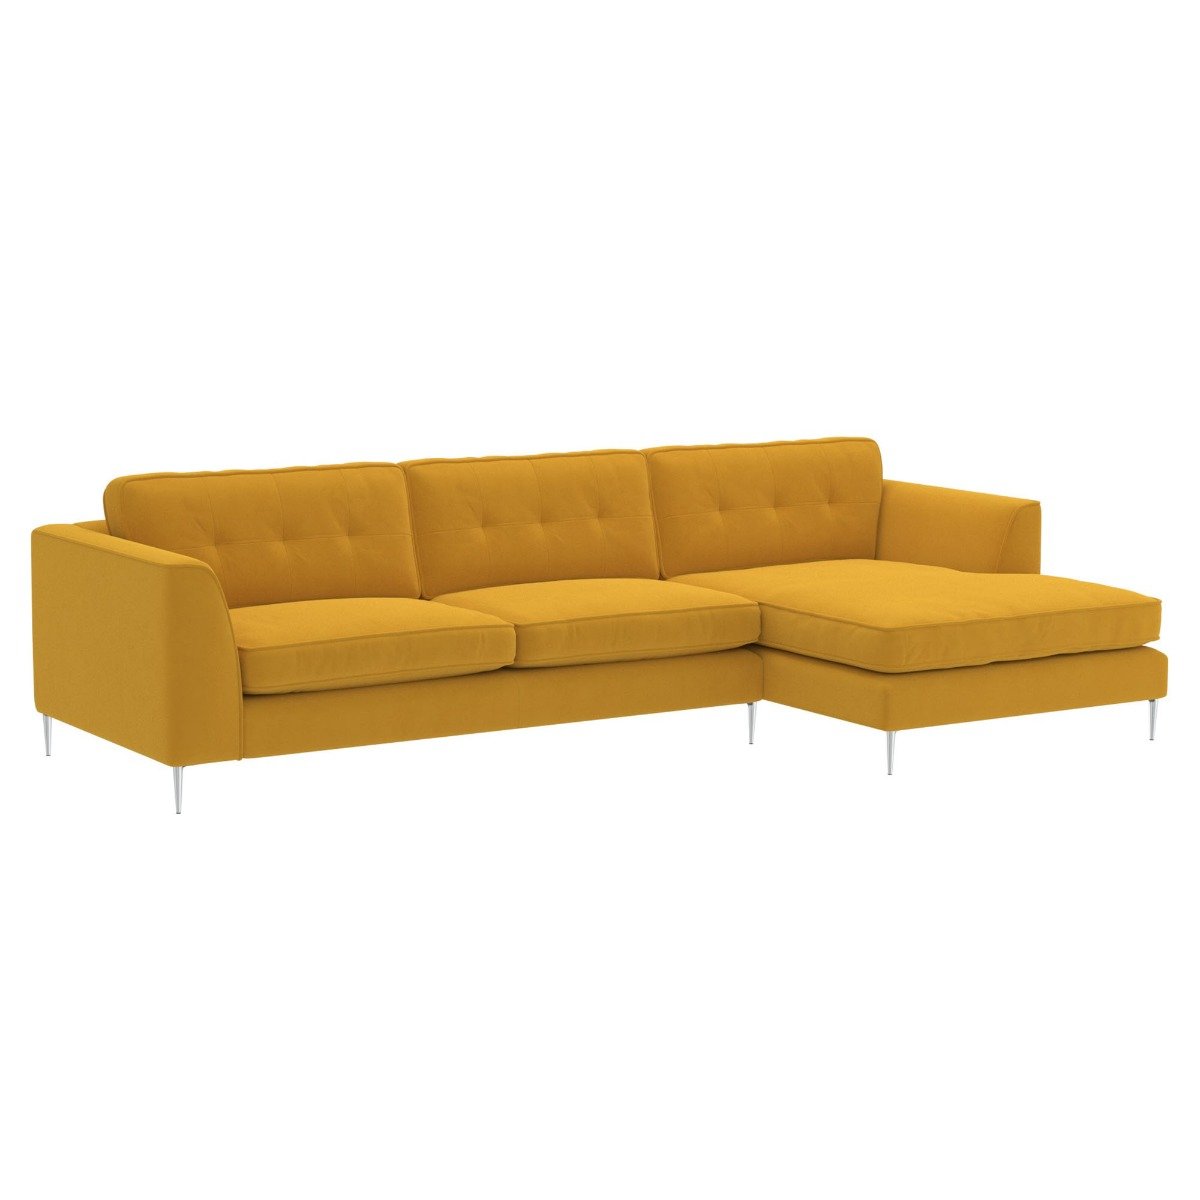 Conza Large Chaise Corner Sofa Right, Orange Fabric | Barker & Stonehouse